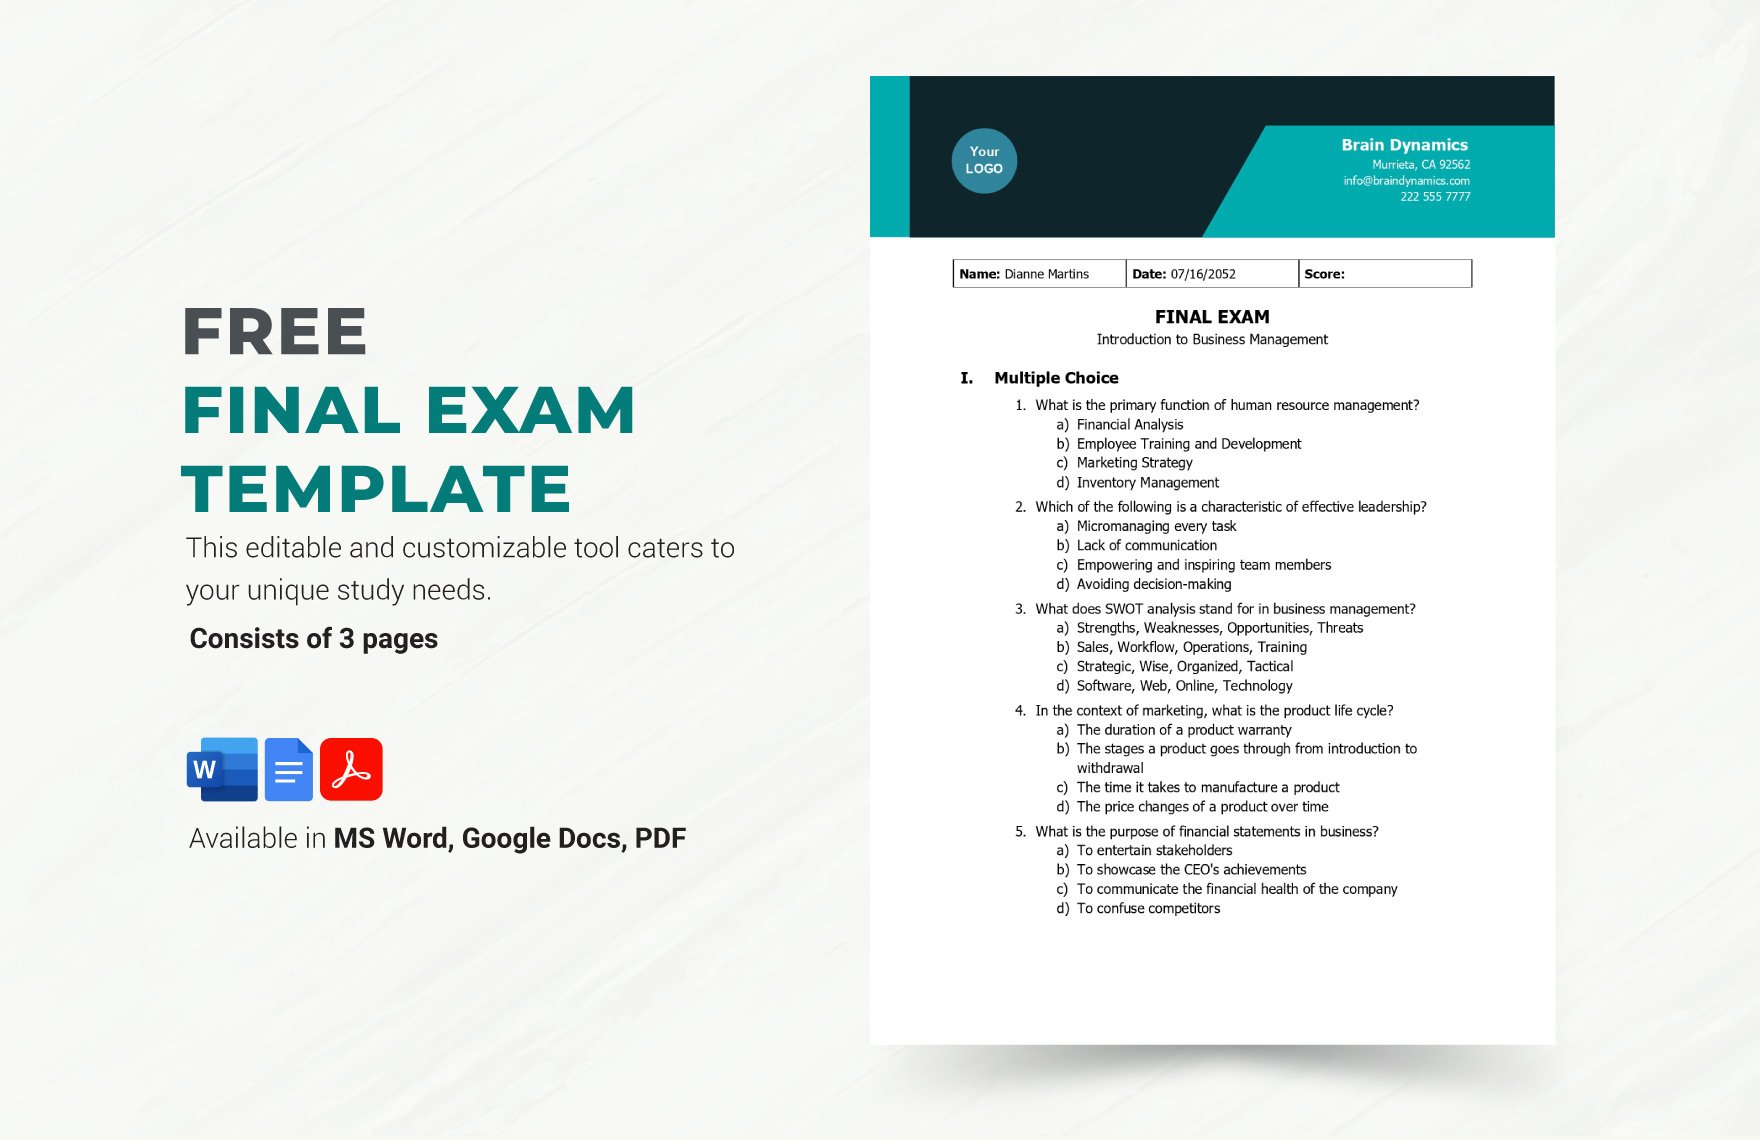 Free Final Exam Template in Word, Google Docs, PDF